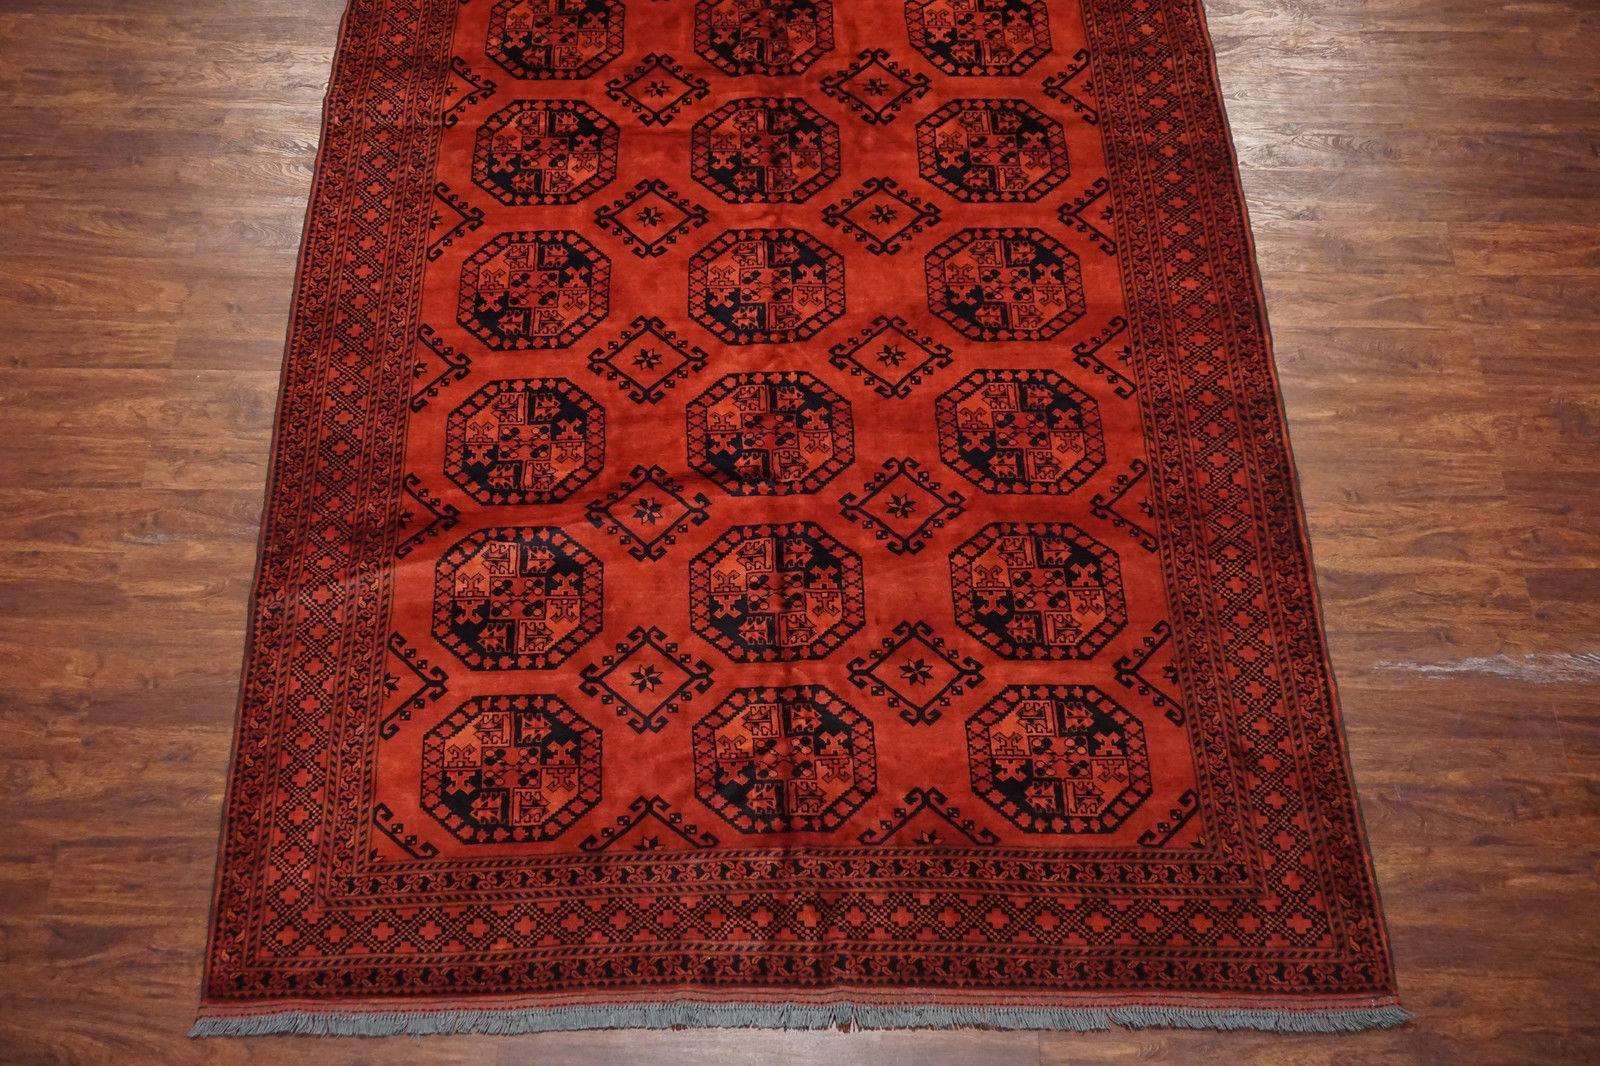 Afghan Turkoman Bukhara Khal Mohamadi rug with elephant feet design

circa 1980 

Measures: 6' 8